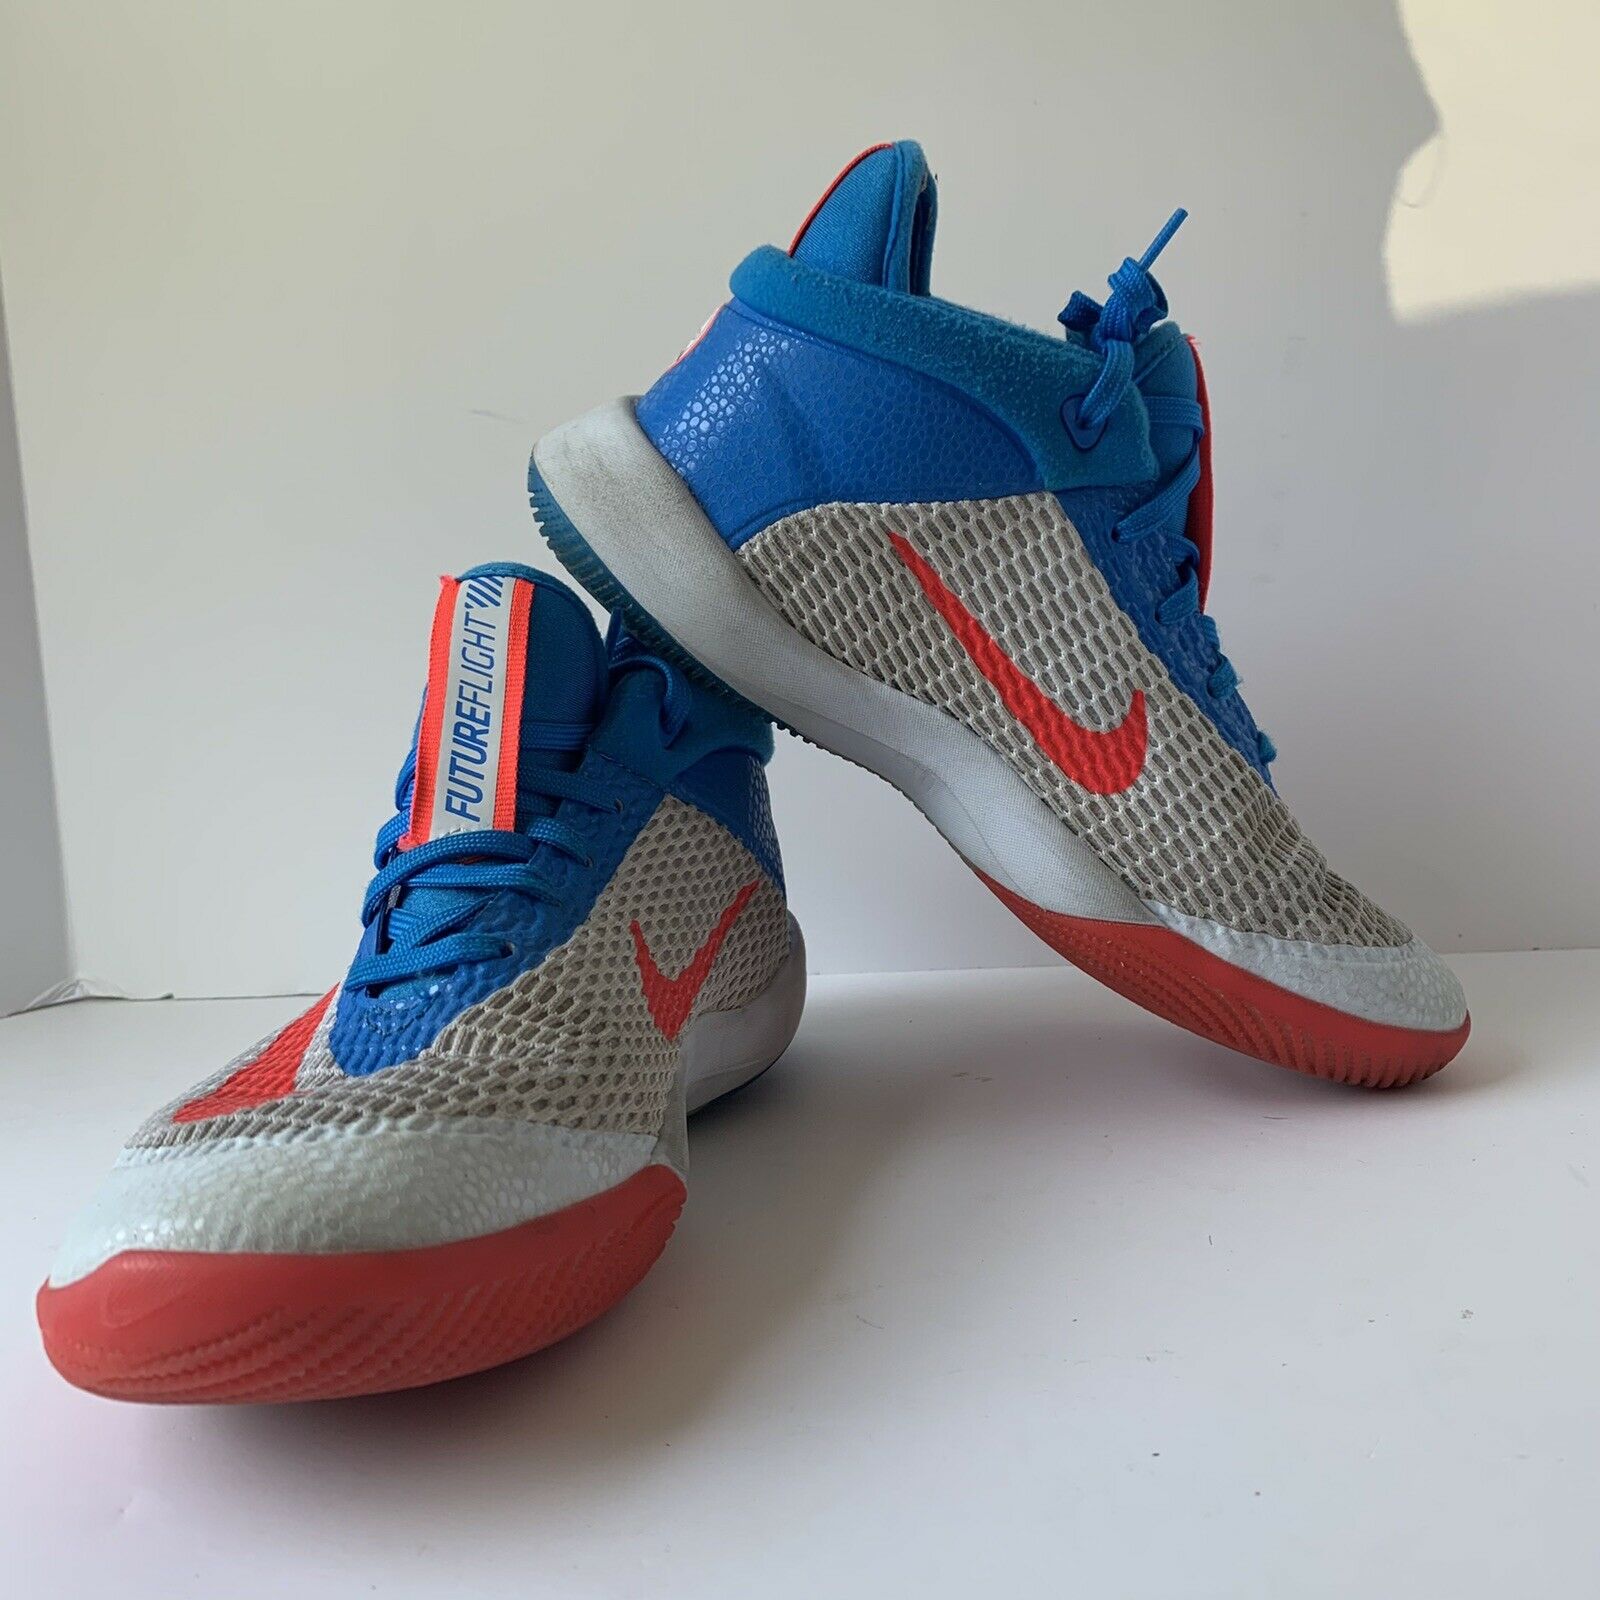 Nike Future Flight Heat CHK Size 4Y Basketball Shoes BV0830-400